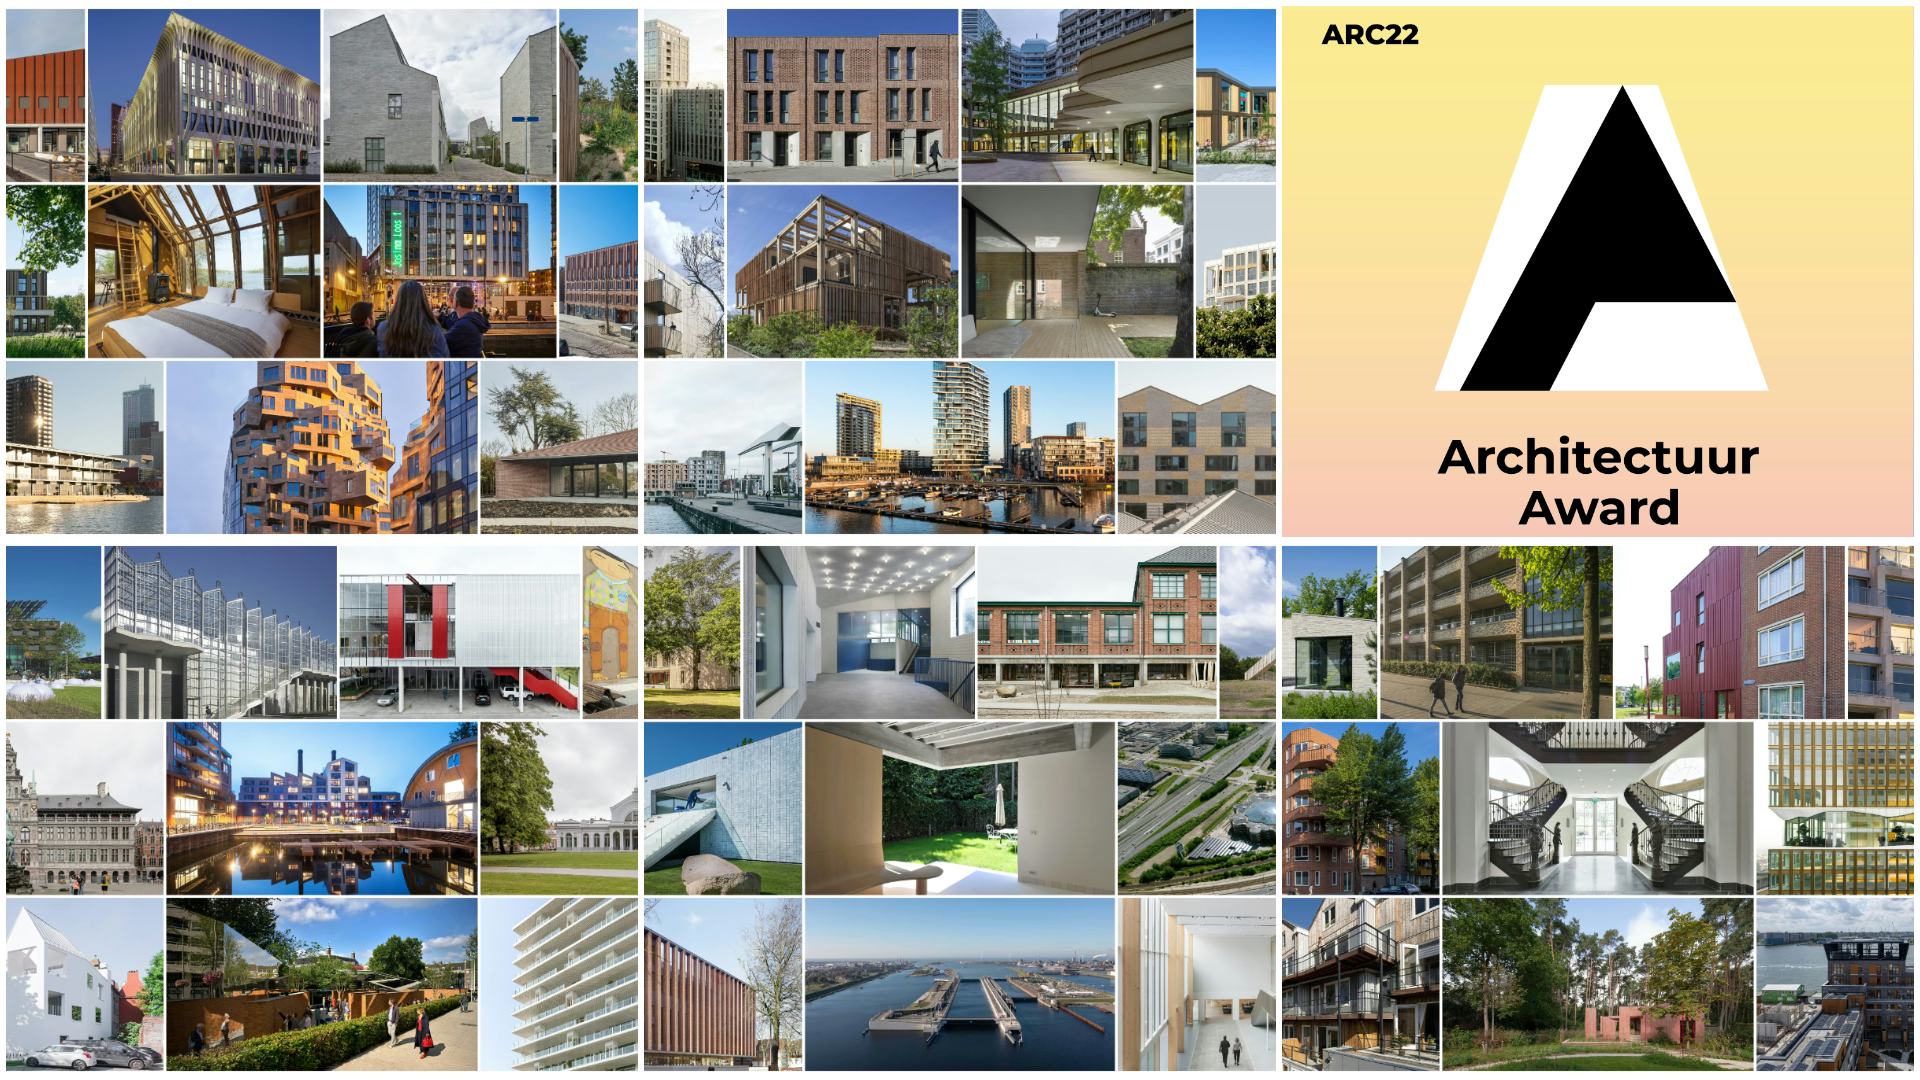 Eerste selectie ARC22 Architectuur Award bekend